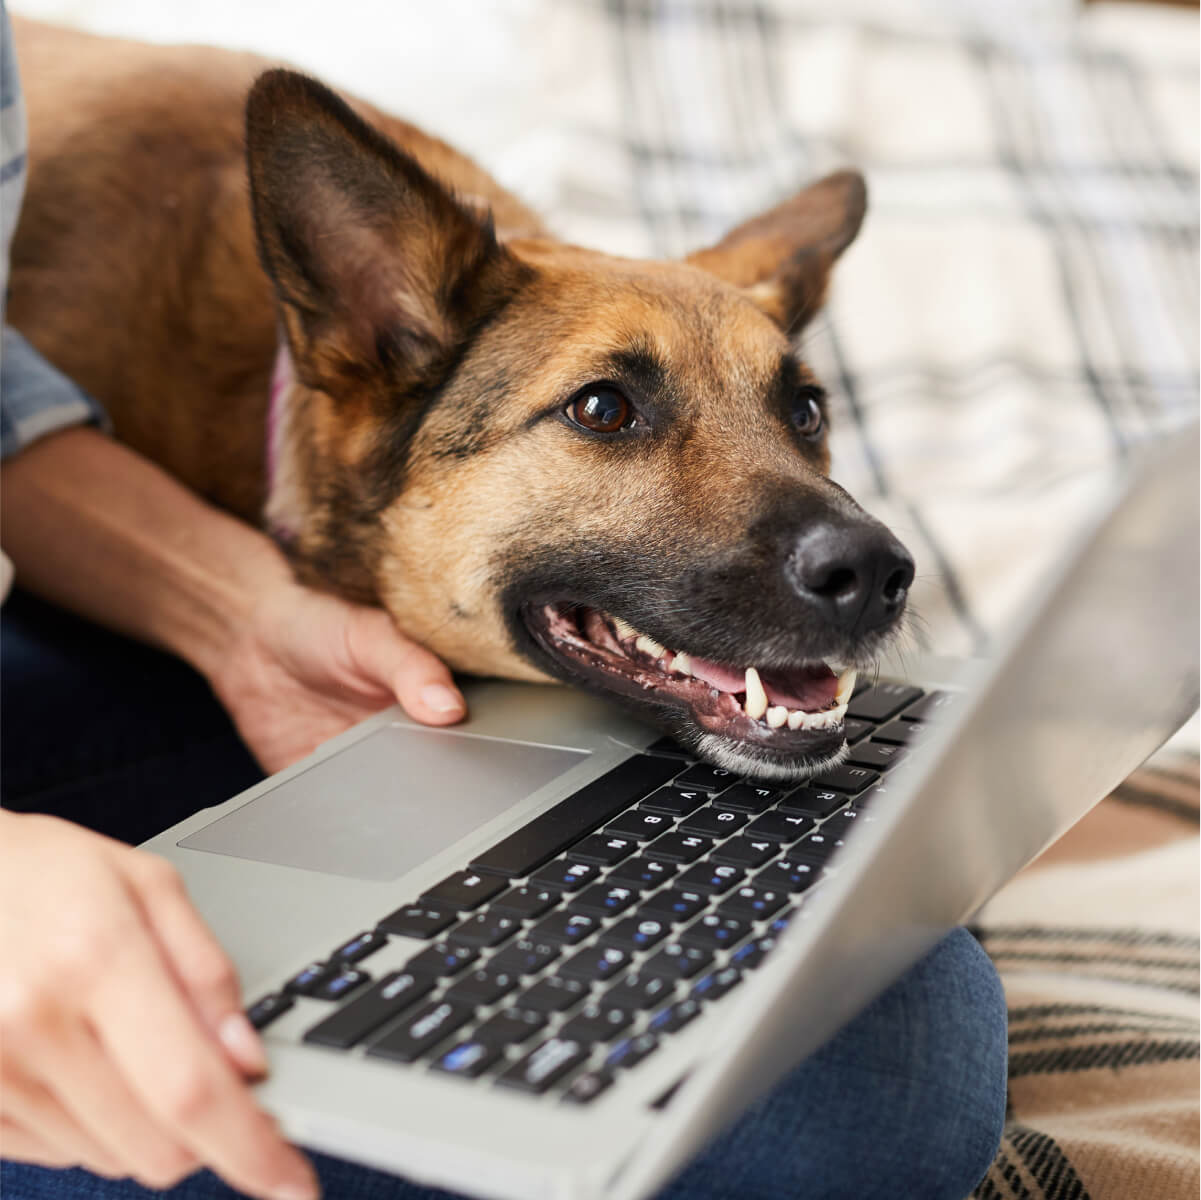 Remote volunteer - image of Dog lying head on Laptop keypad